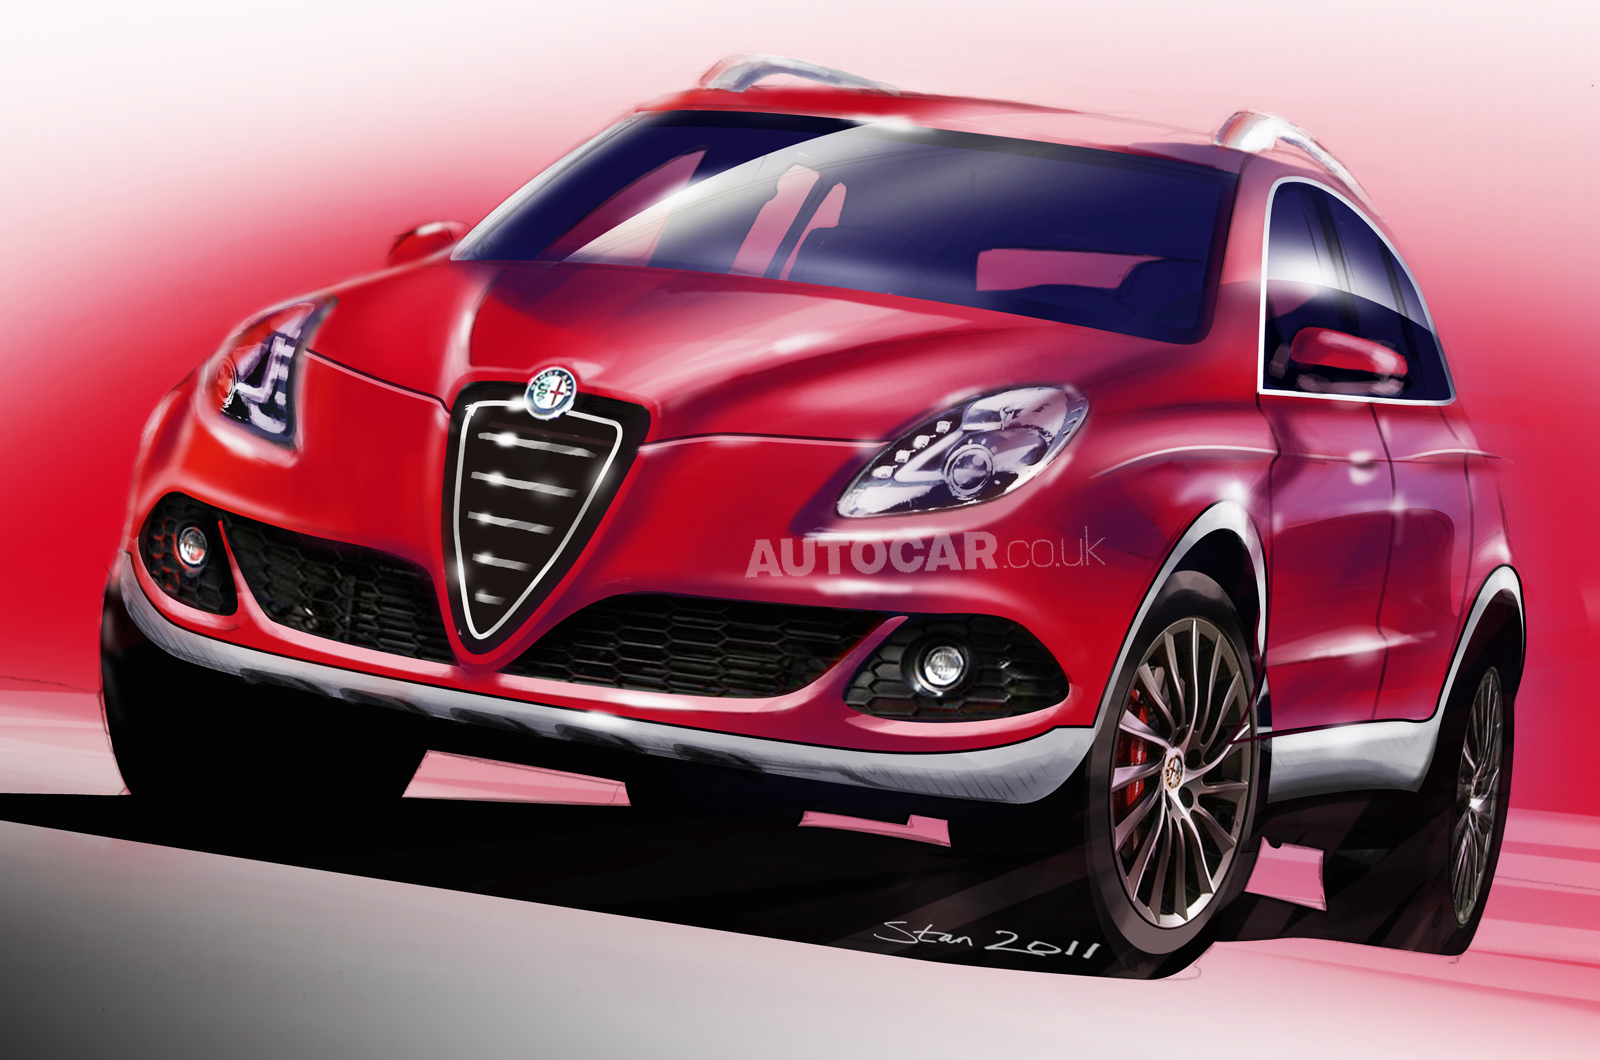 Alfa Romeo Giulietta replacement remains a possibility